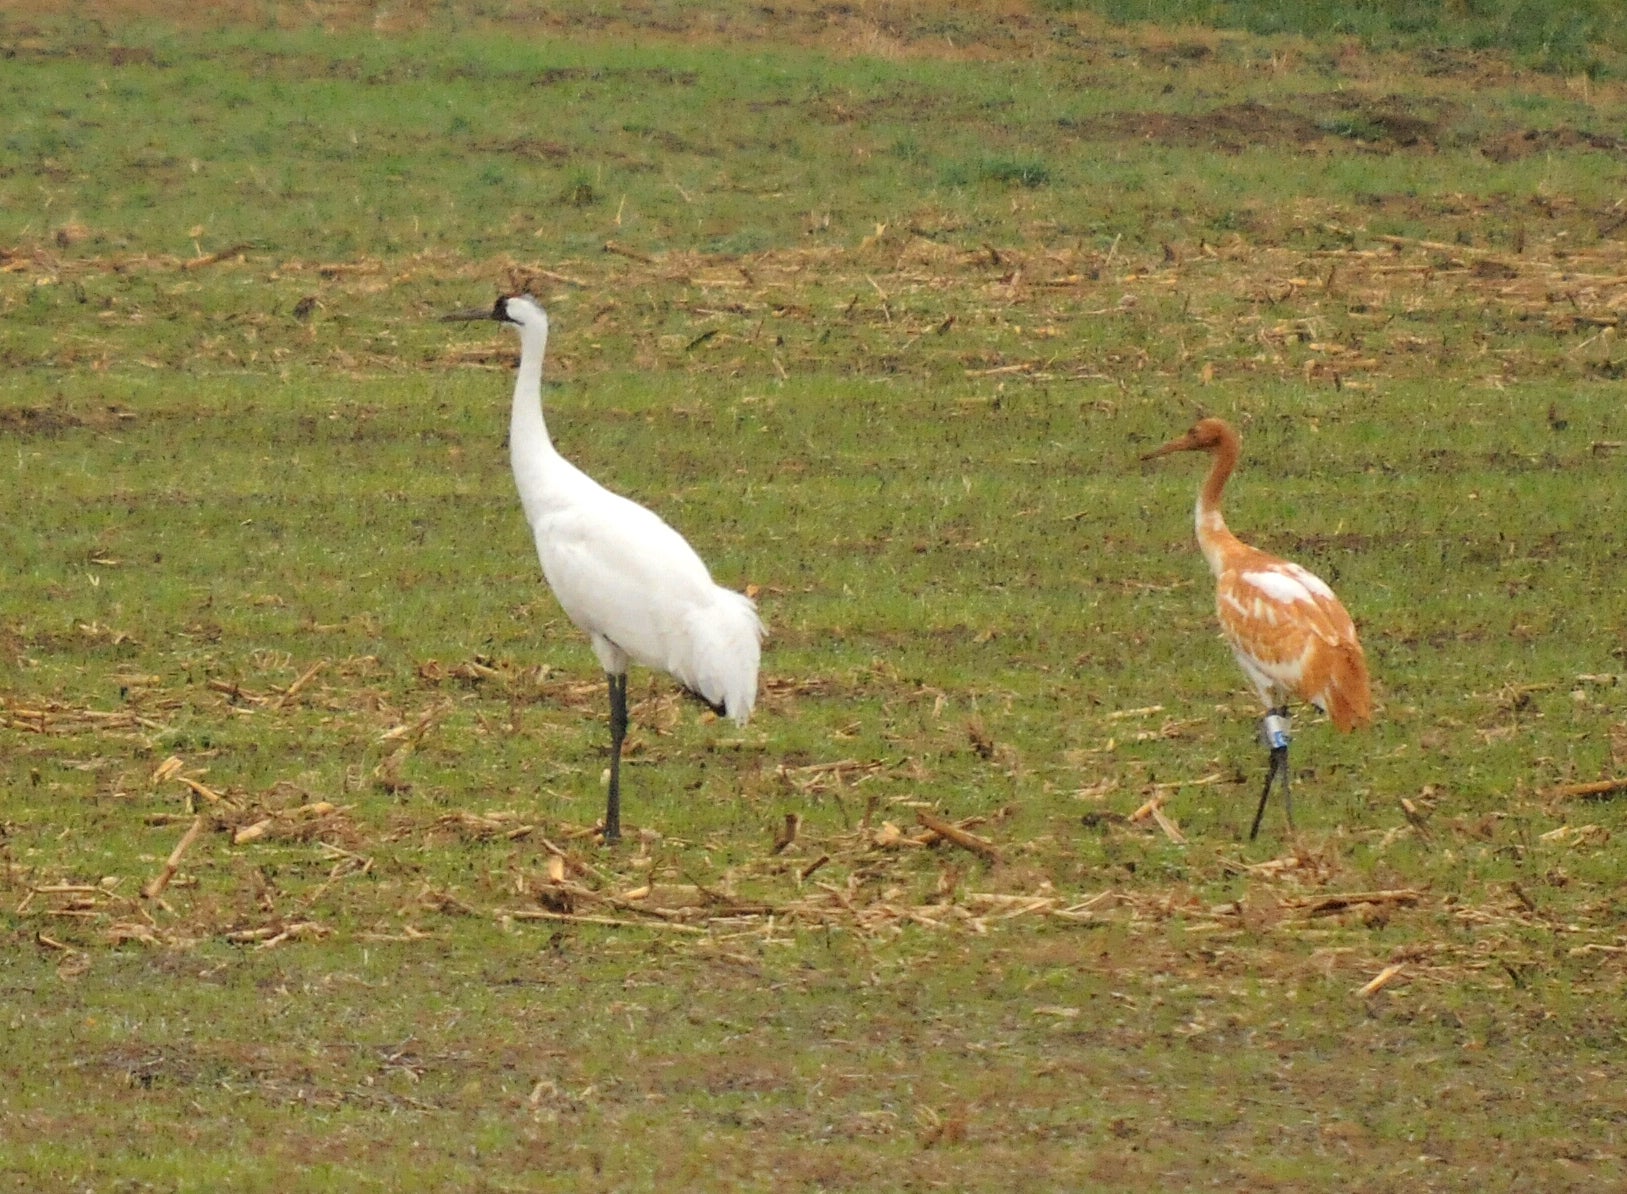 Whooping cranes in a cropfield